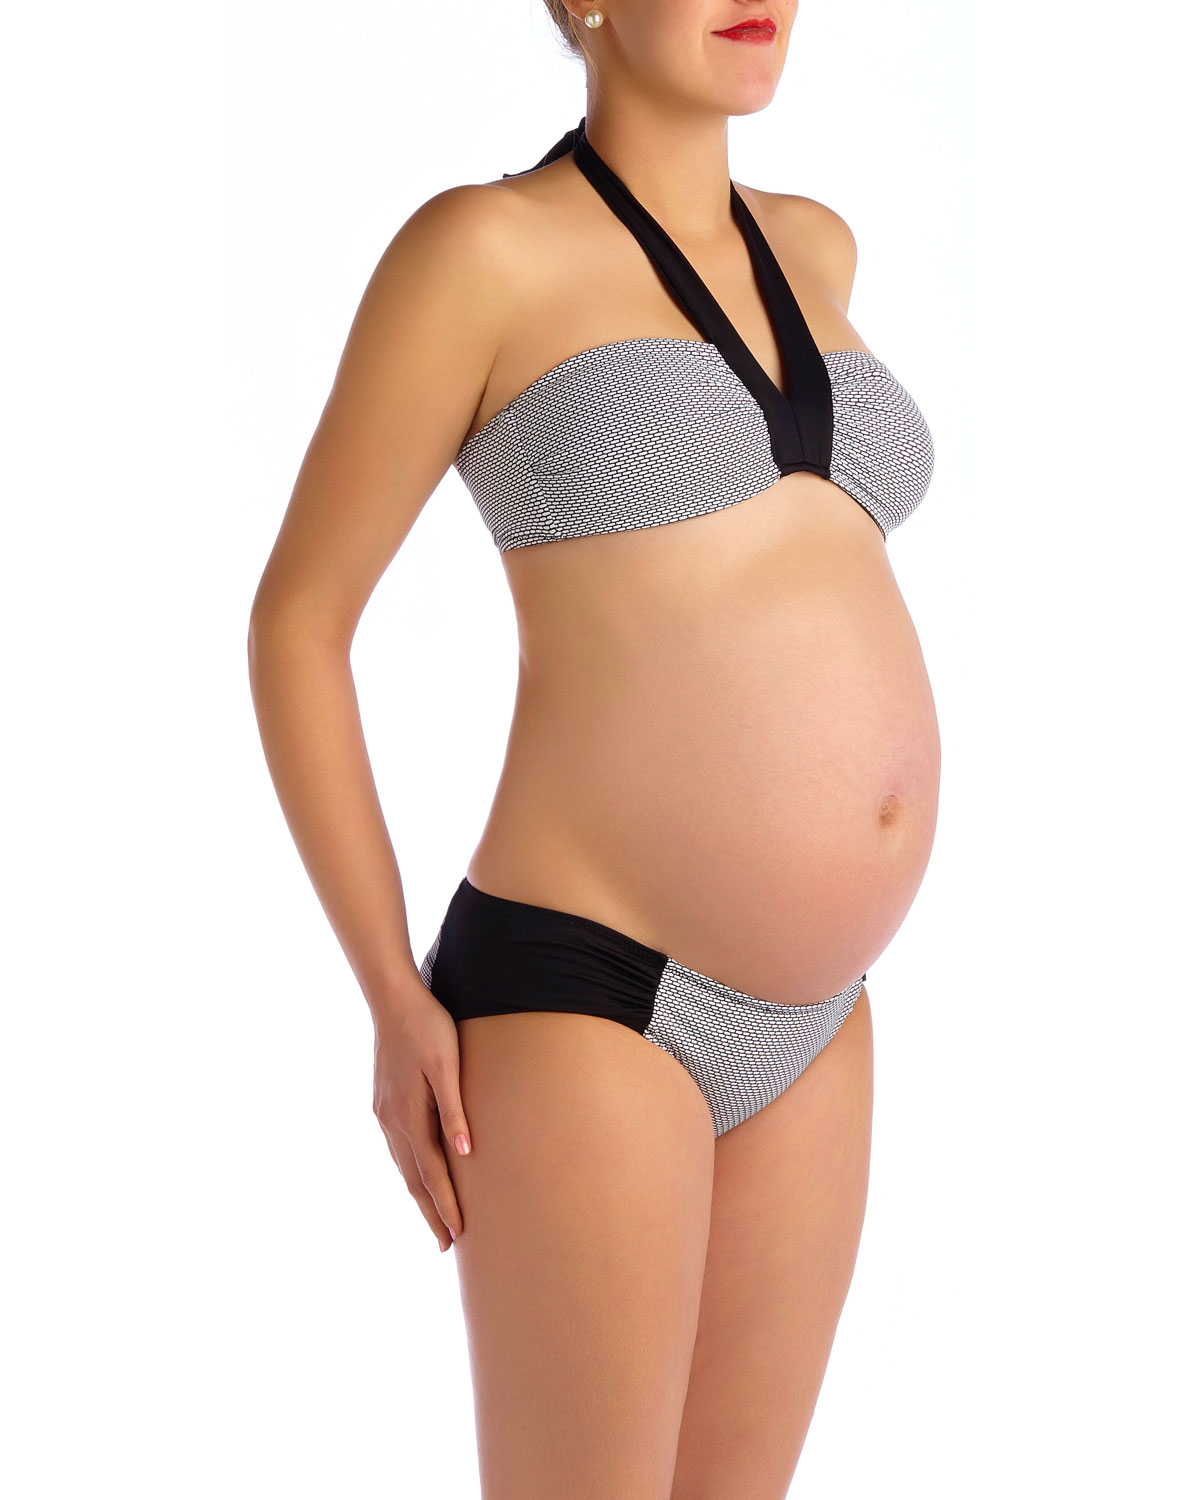 Contrast Trim Maternity Bikini ($93)